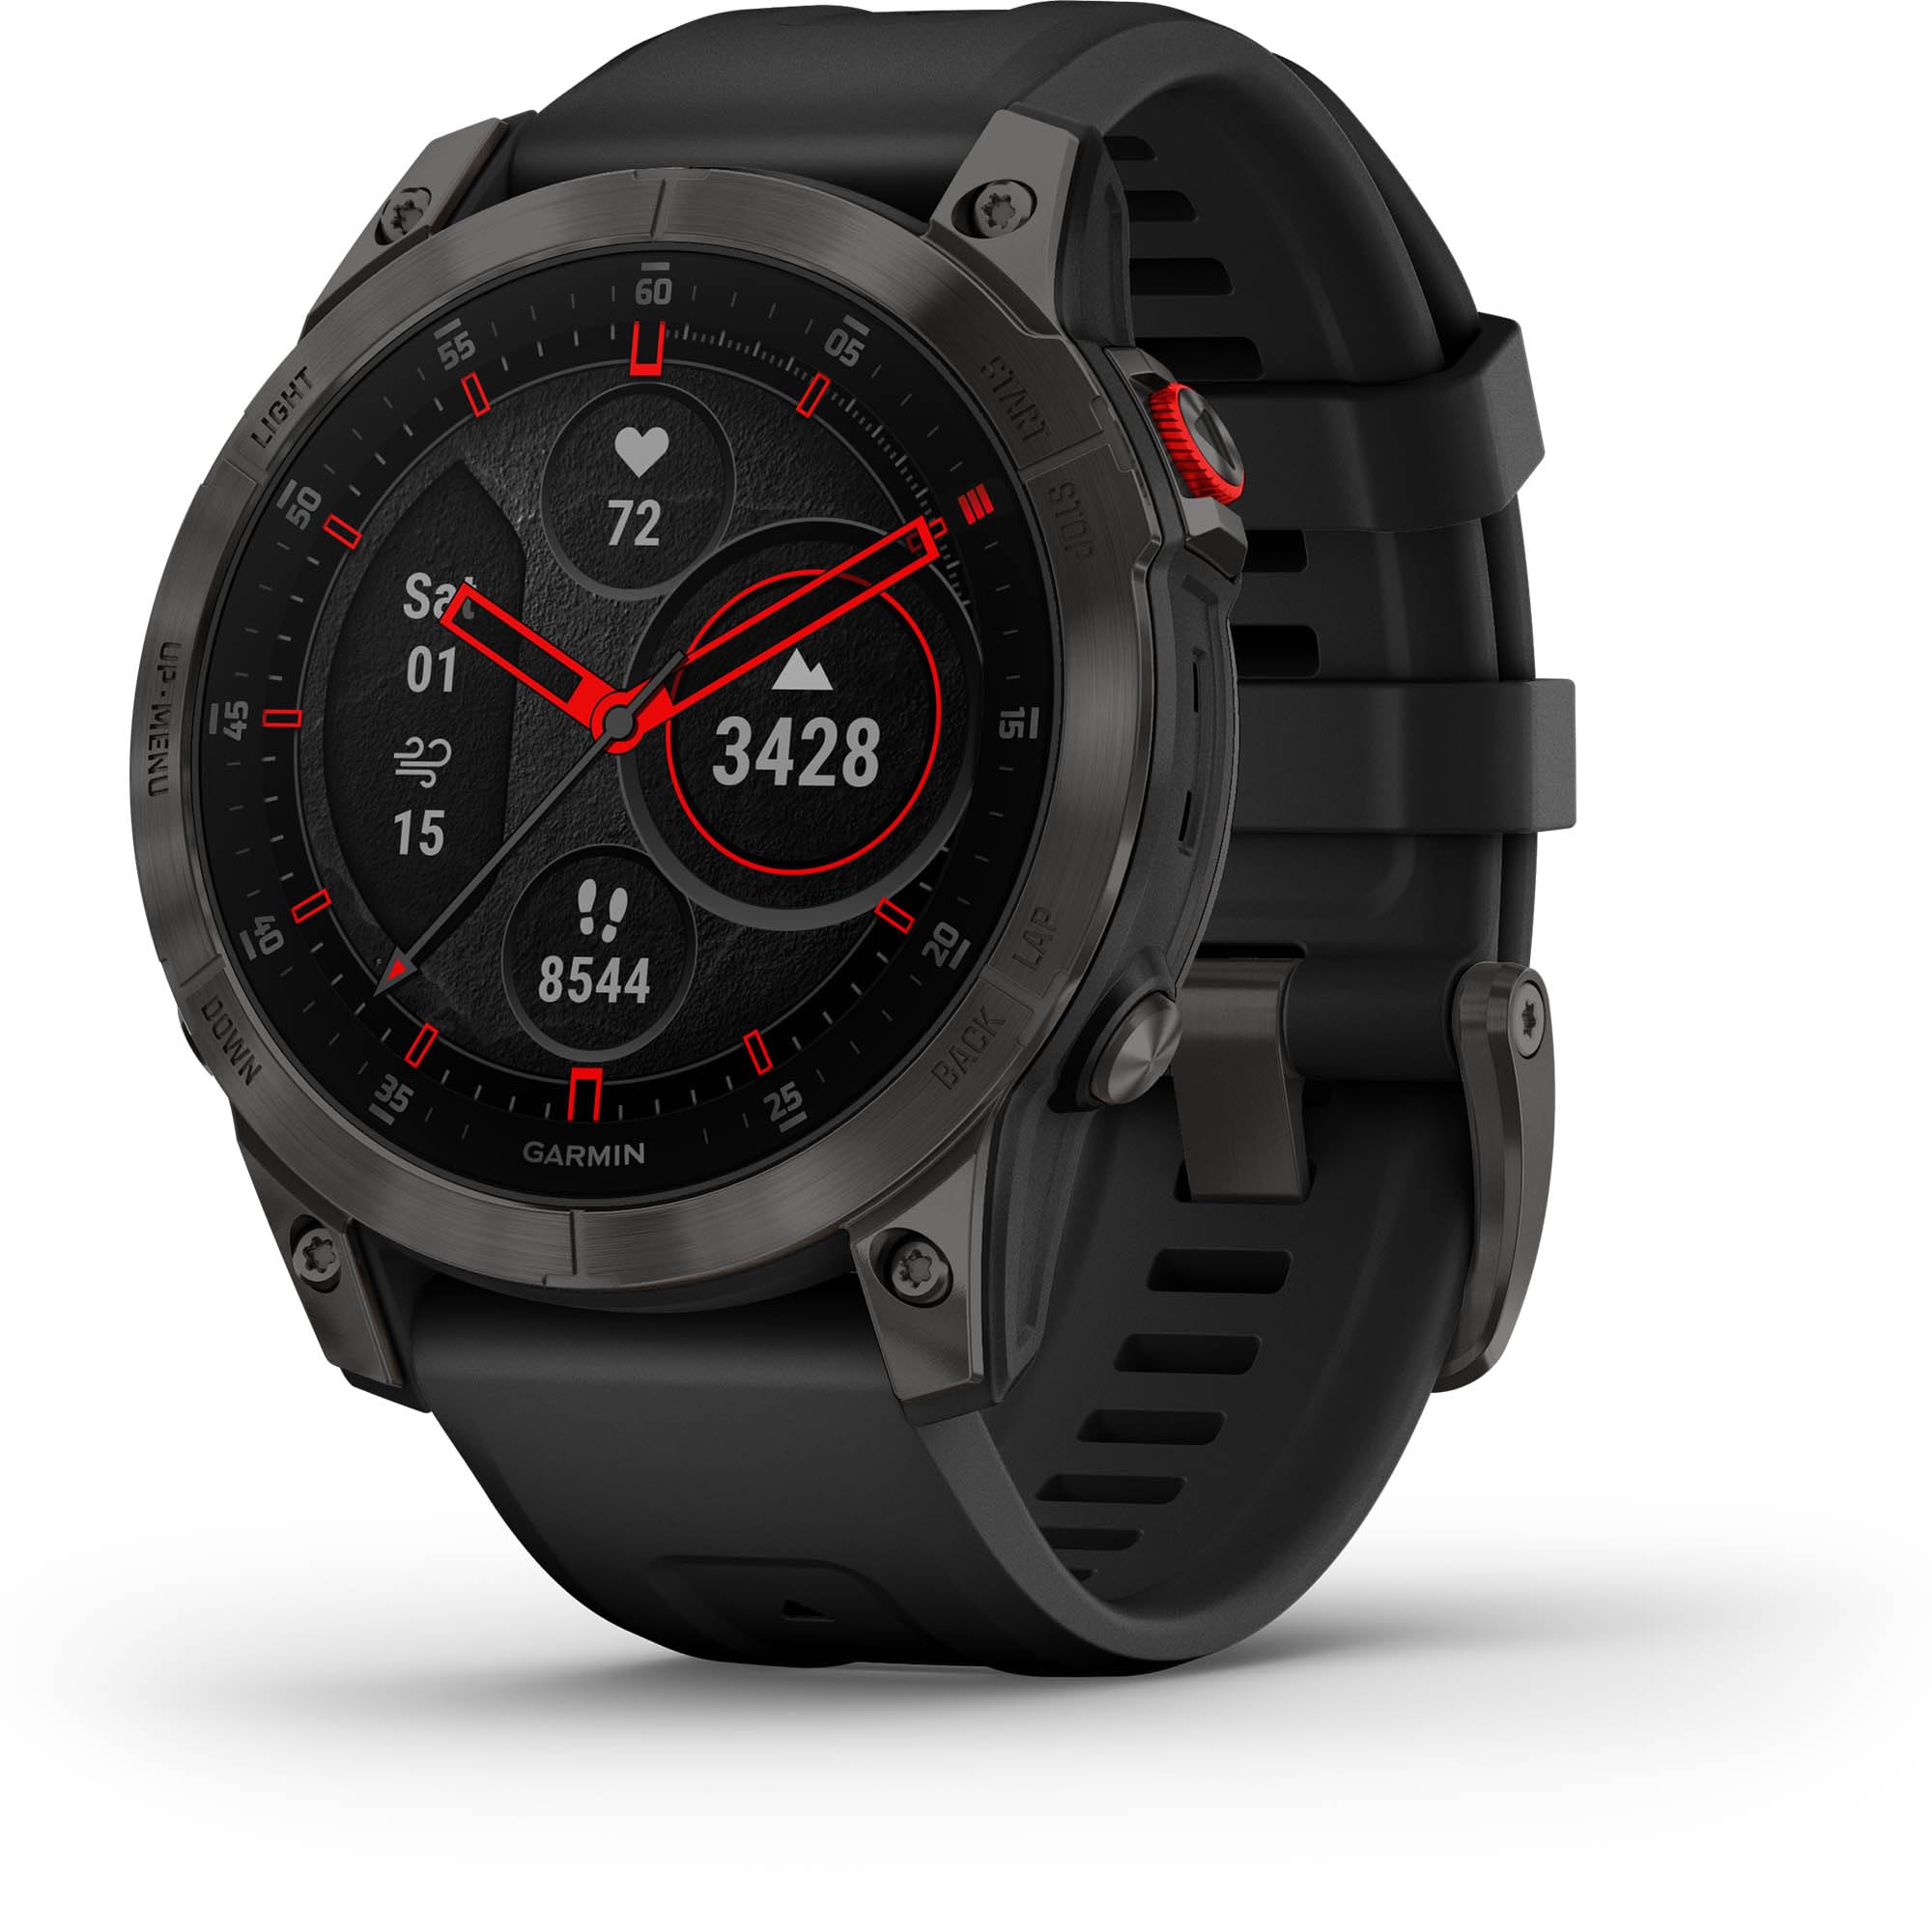 Garmin 010 02582 10 epix Gen 2, Premium active smartwatch, Health and wellness features, touchscreen AMOLED display, adventure watch with advanced features, black titanium>